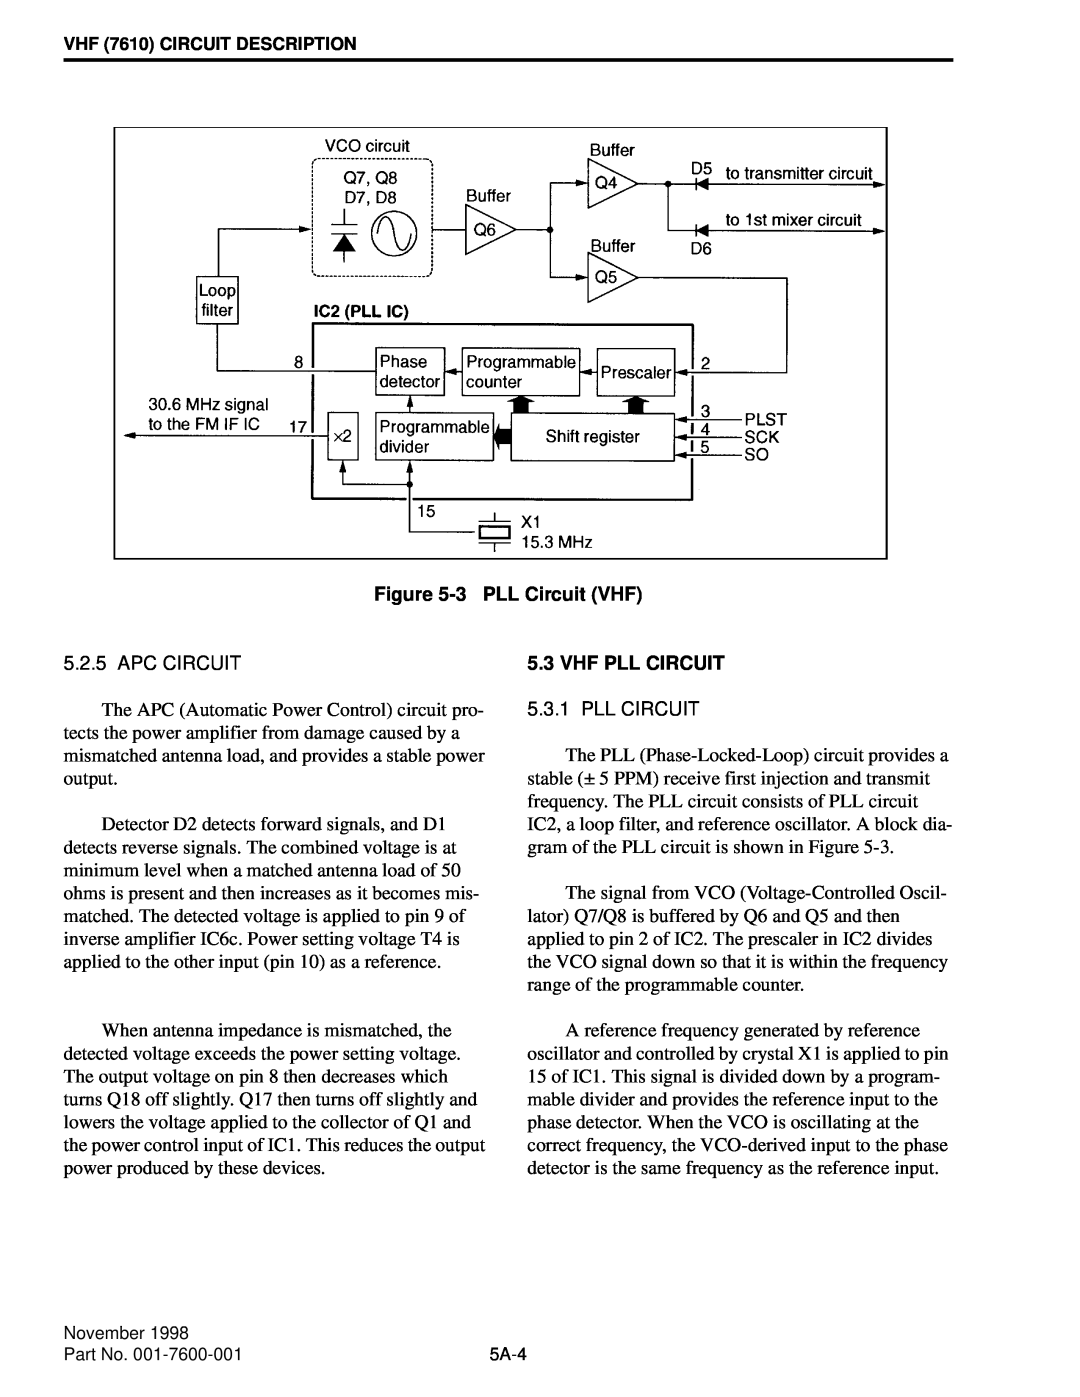 EFJohnson 761X, 764X service manual 3PLL Circuit VHF, Apc Circuit, Vhf Pll Circuit 